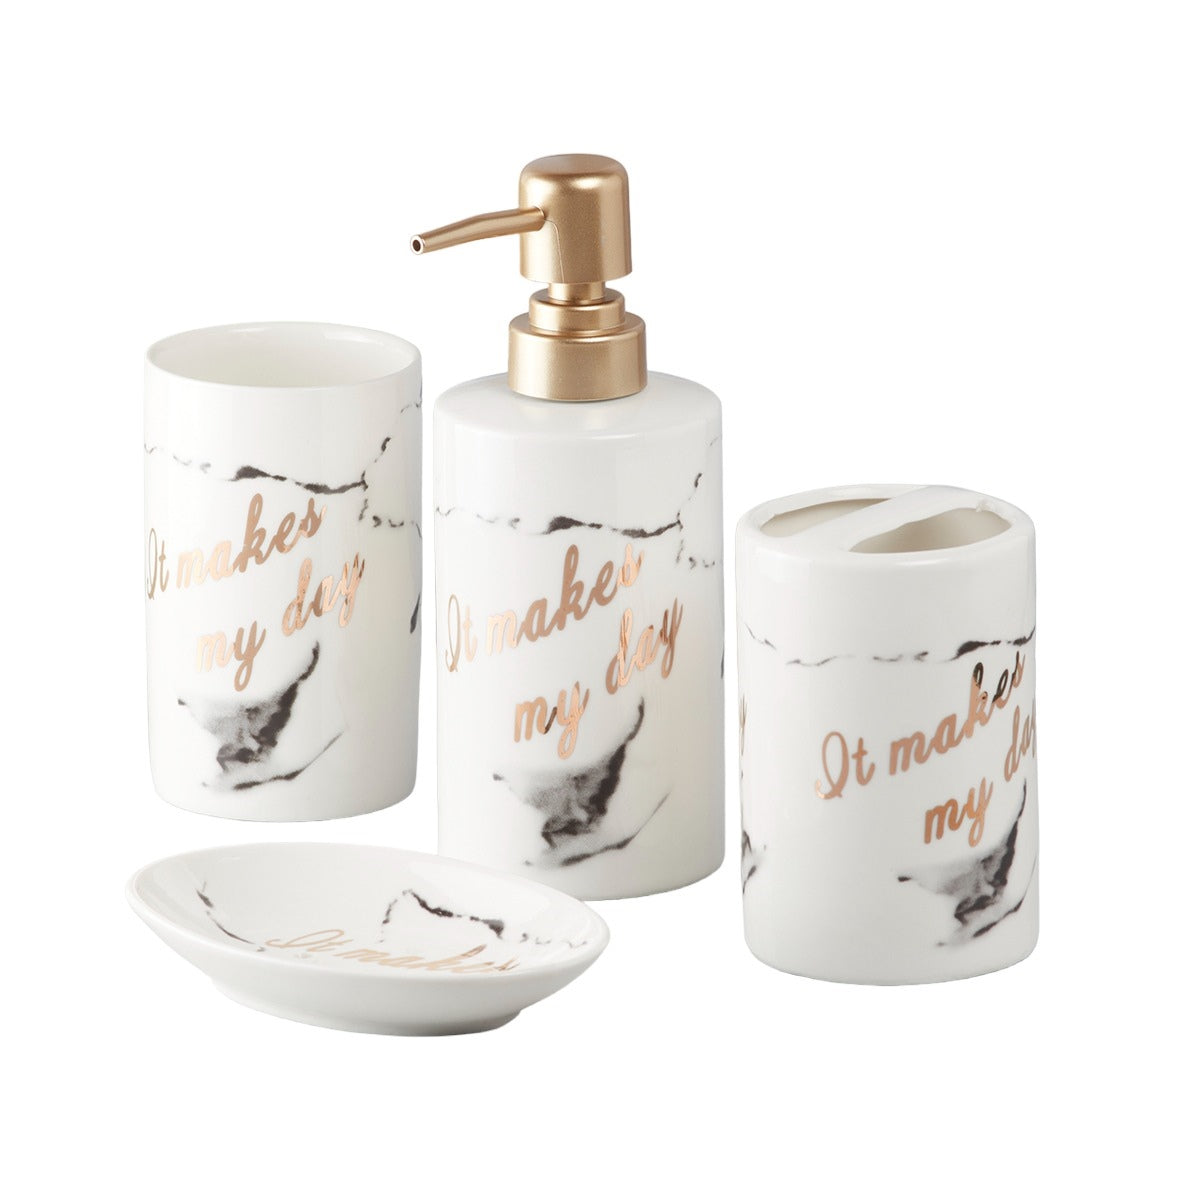 Ceramic Bathroom Accessories Set of 4 Bath Set with Soap Dispenser (7694)